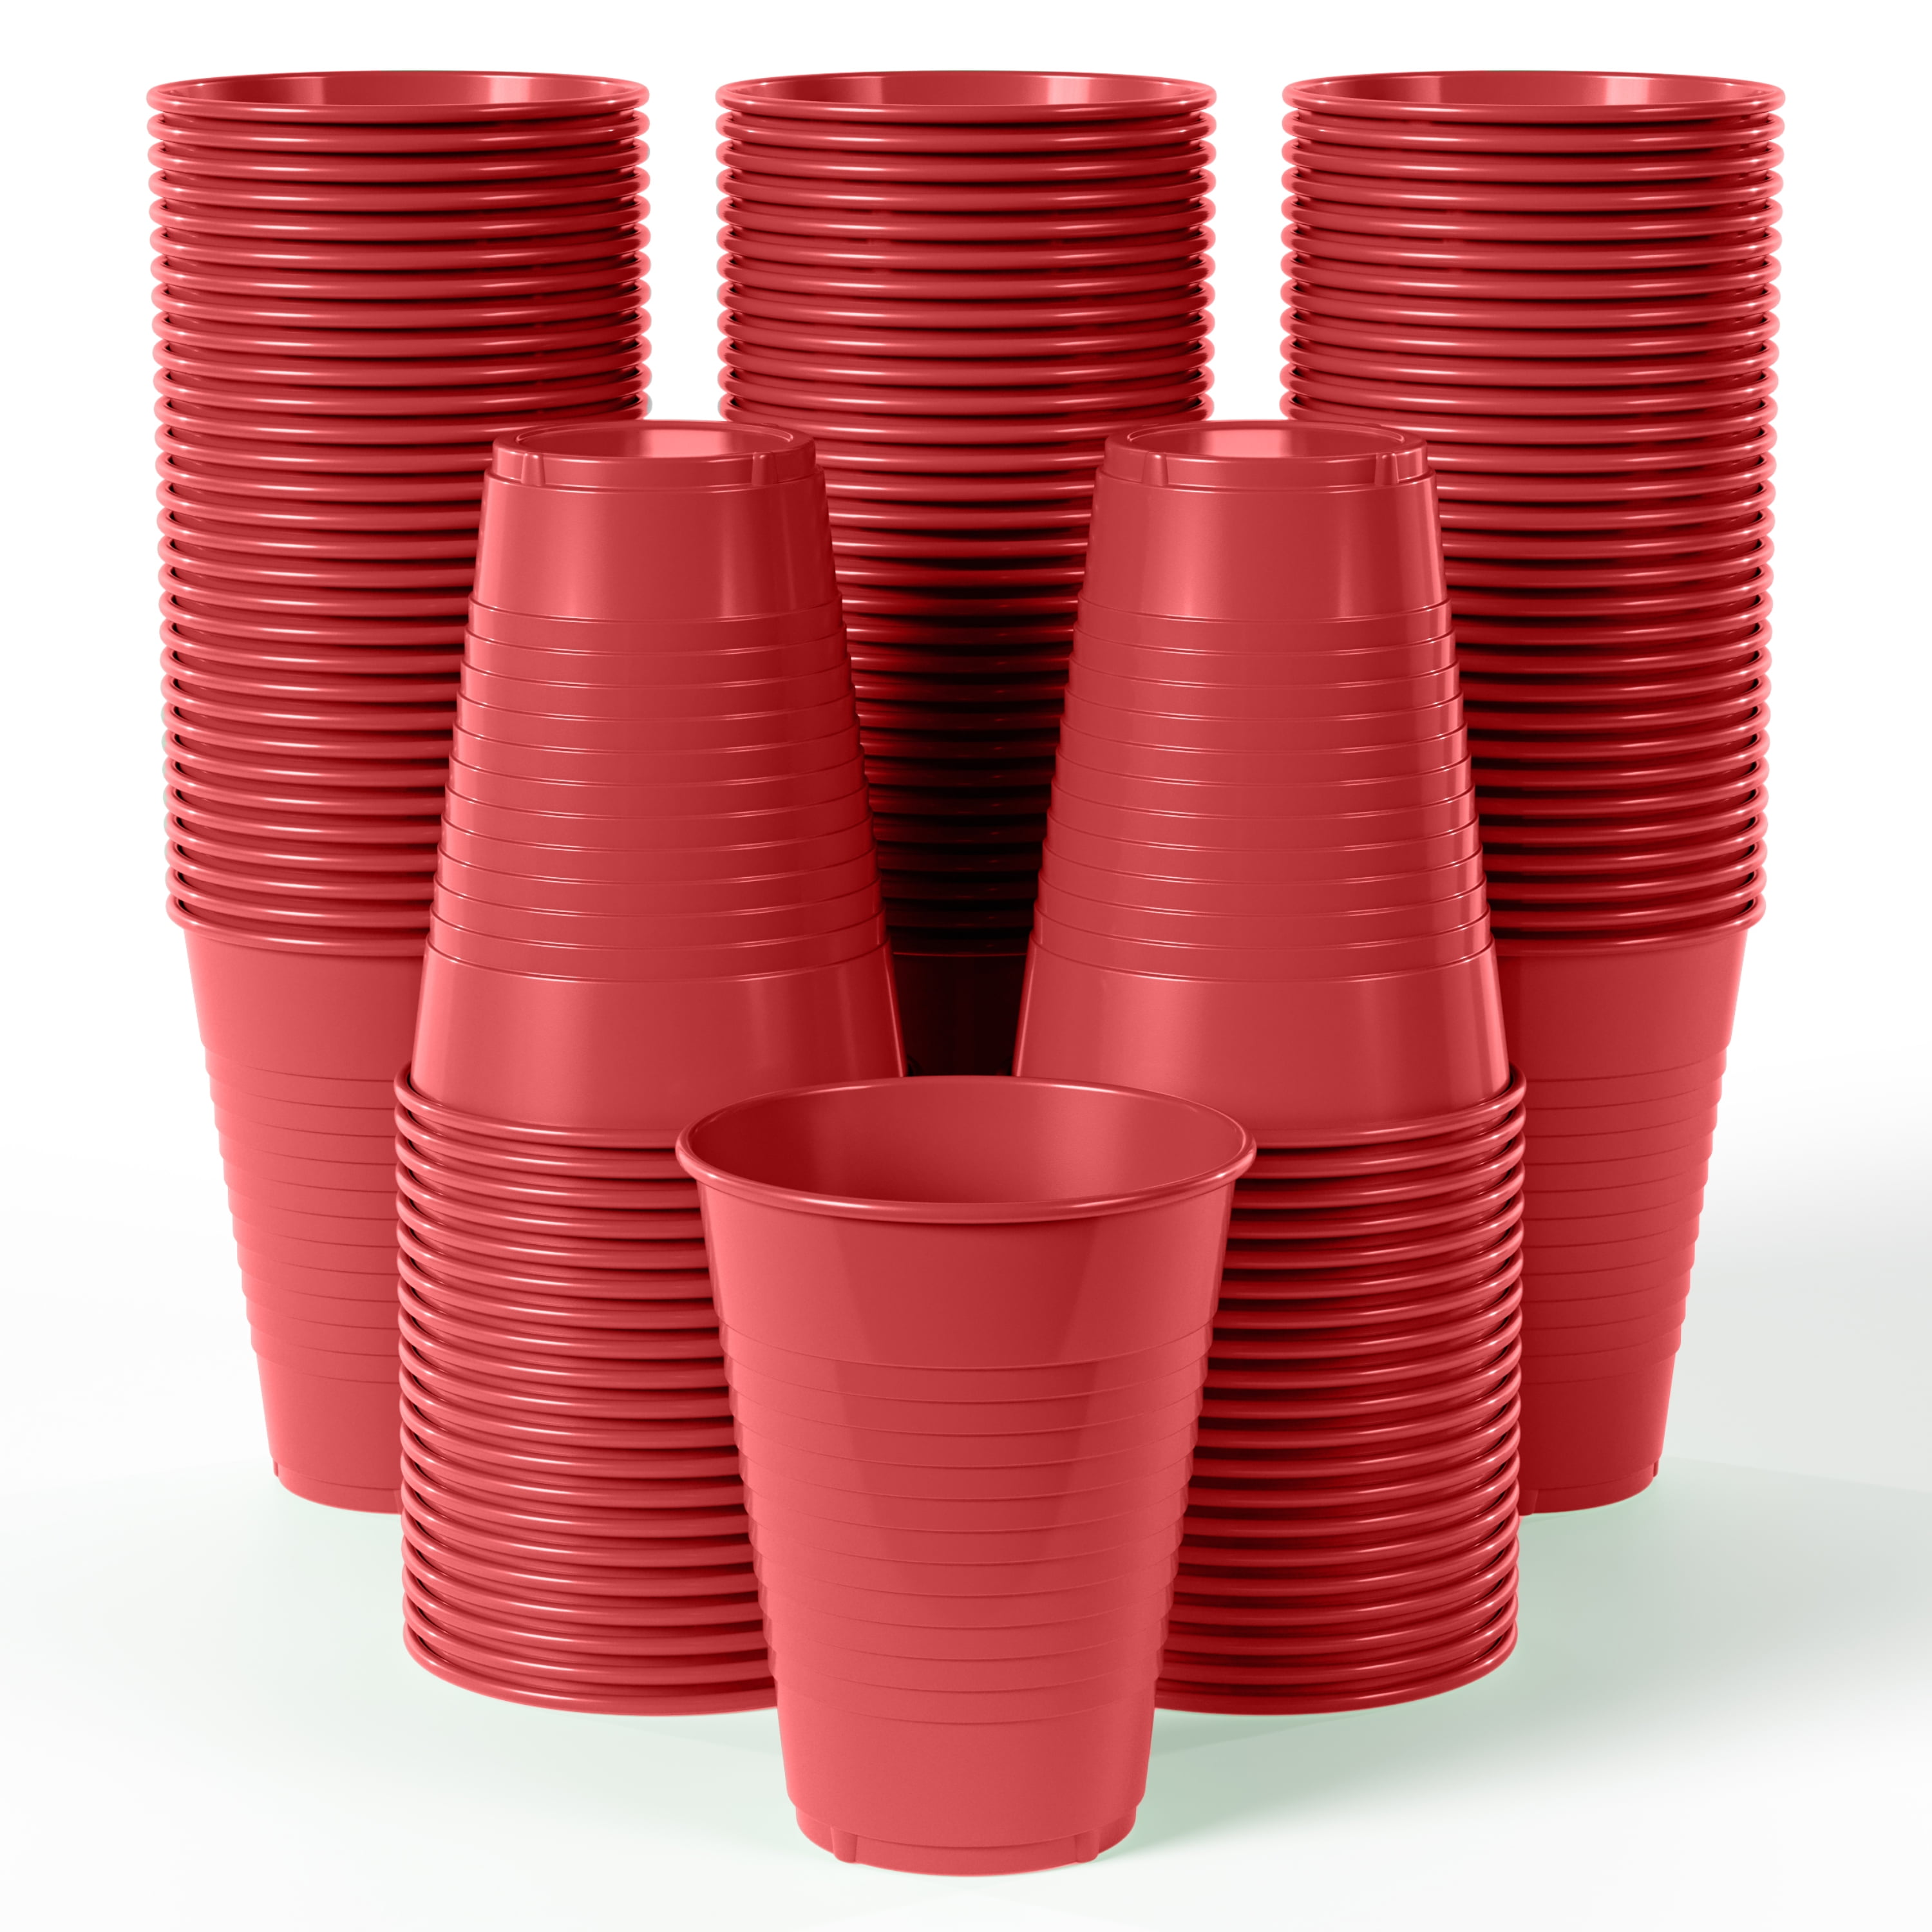  TashiBox 12 oz disposable plastic party cups (Red, 100